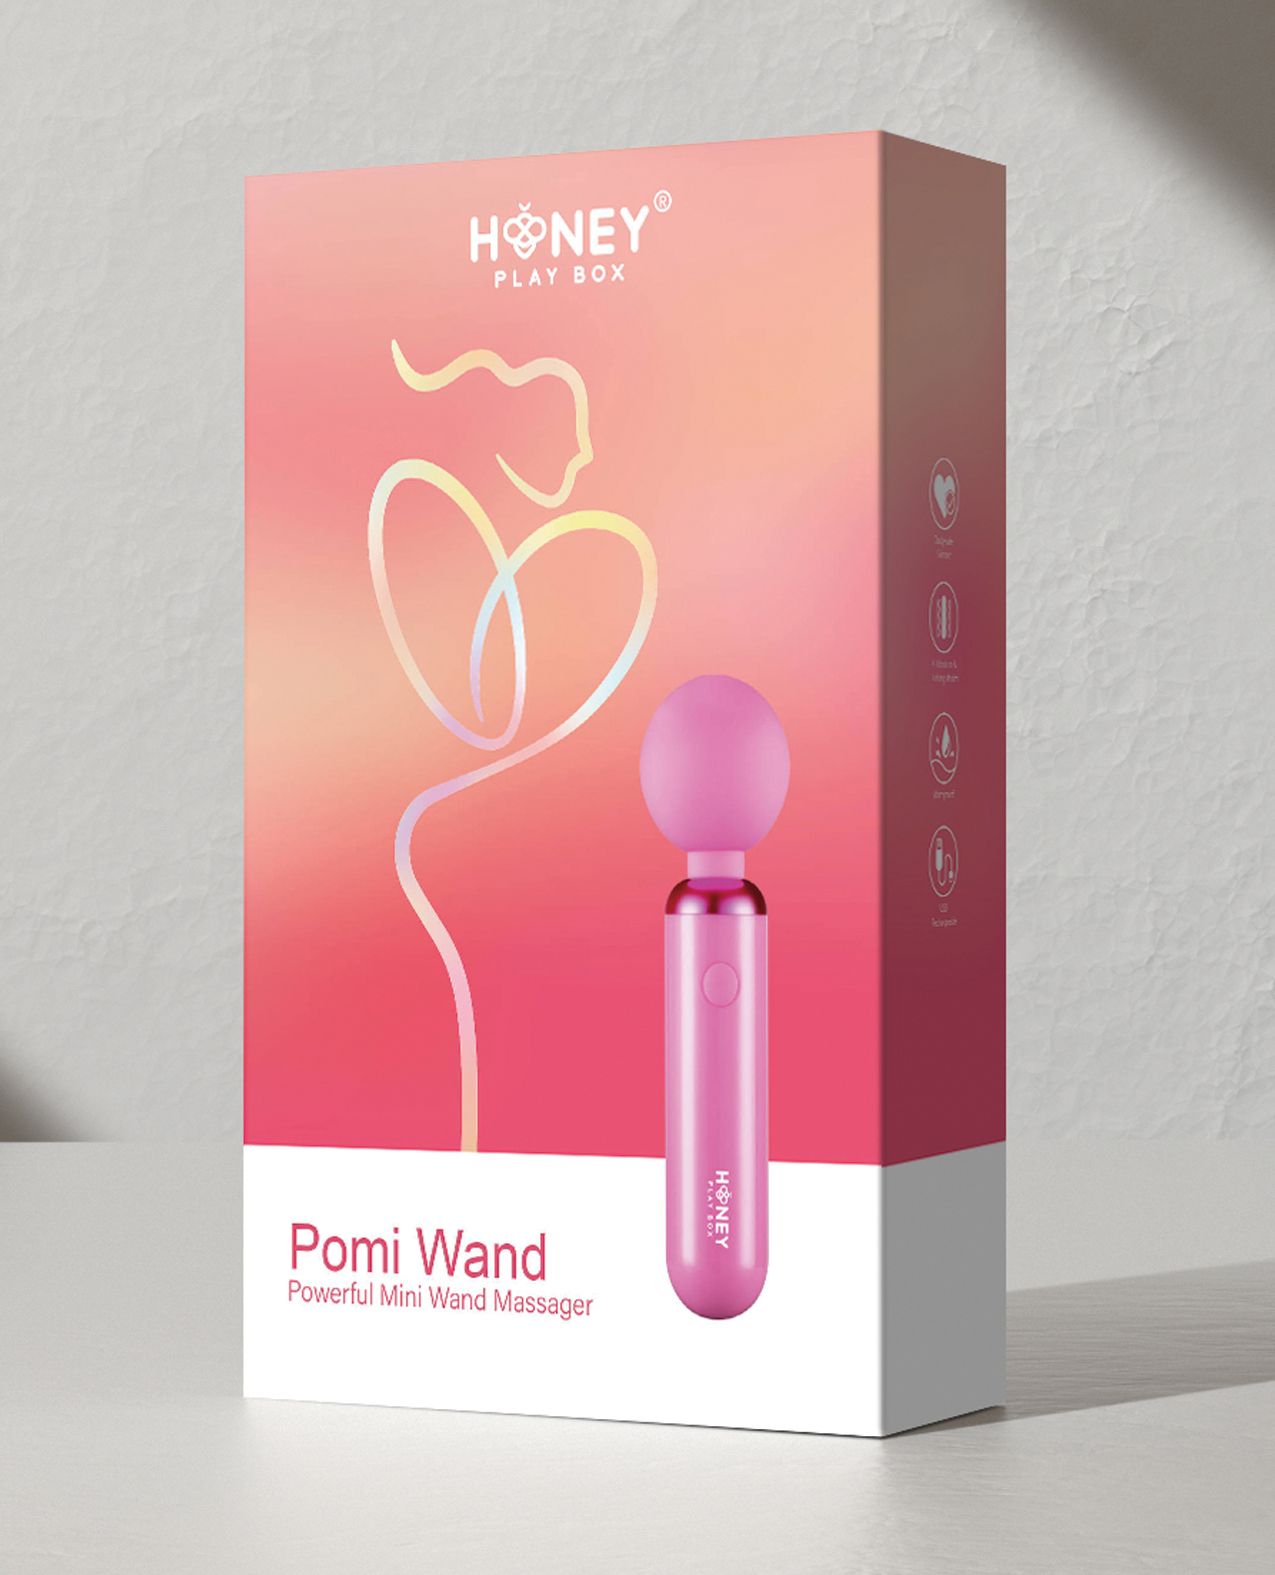 Pomi Wand Clit Tease 10 Mode Vibrating Mini Wand Massager